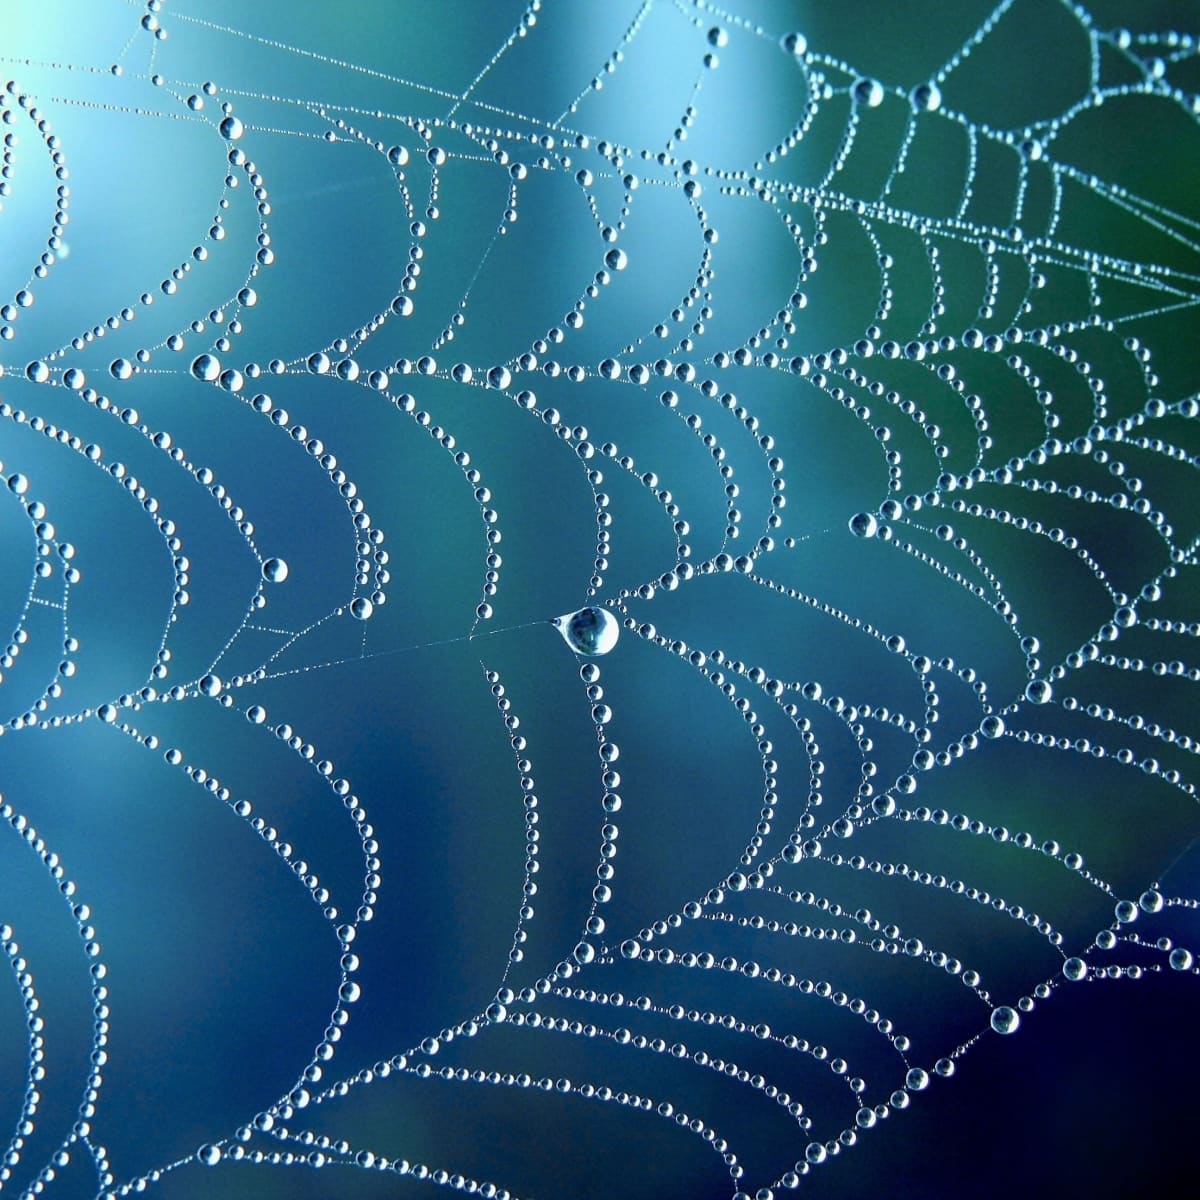 Sticky Science: the Evolution of Spider Webs